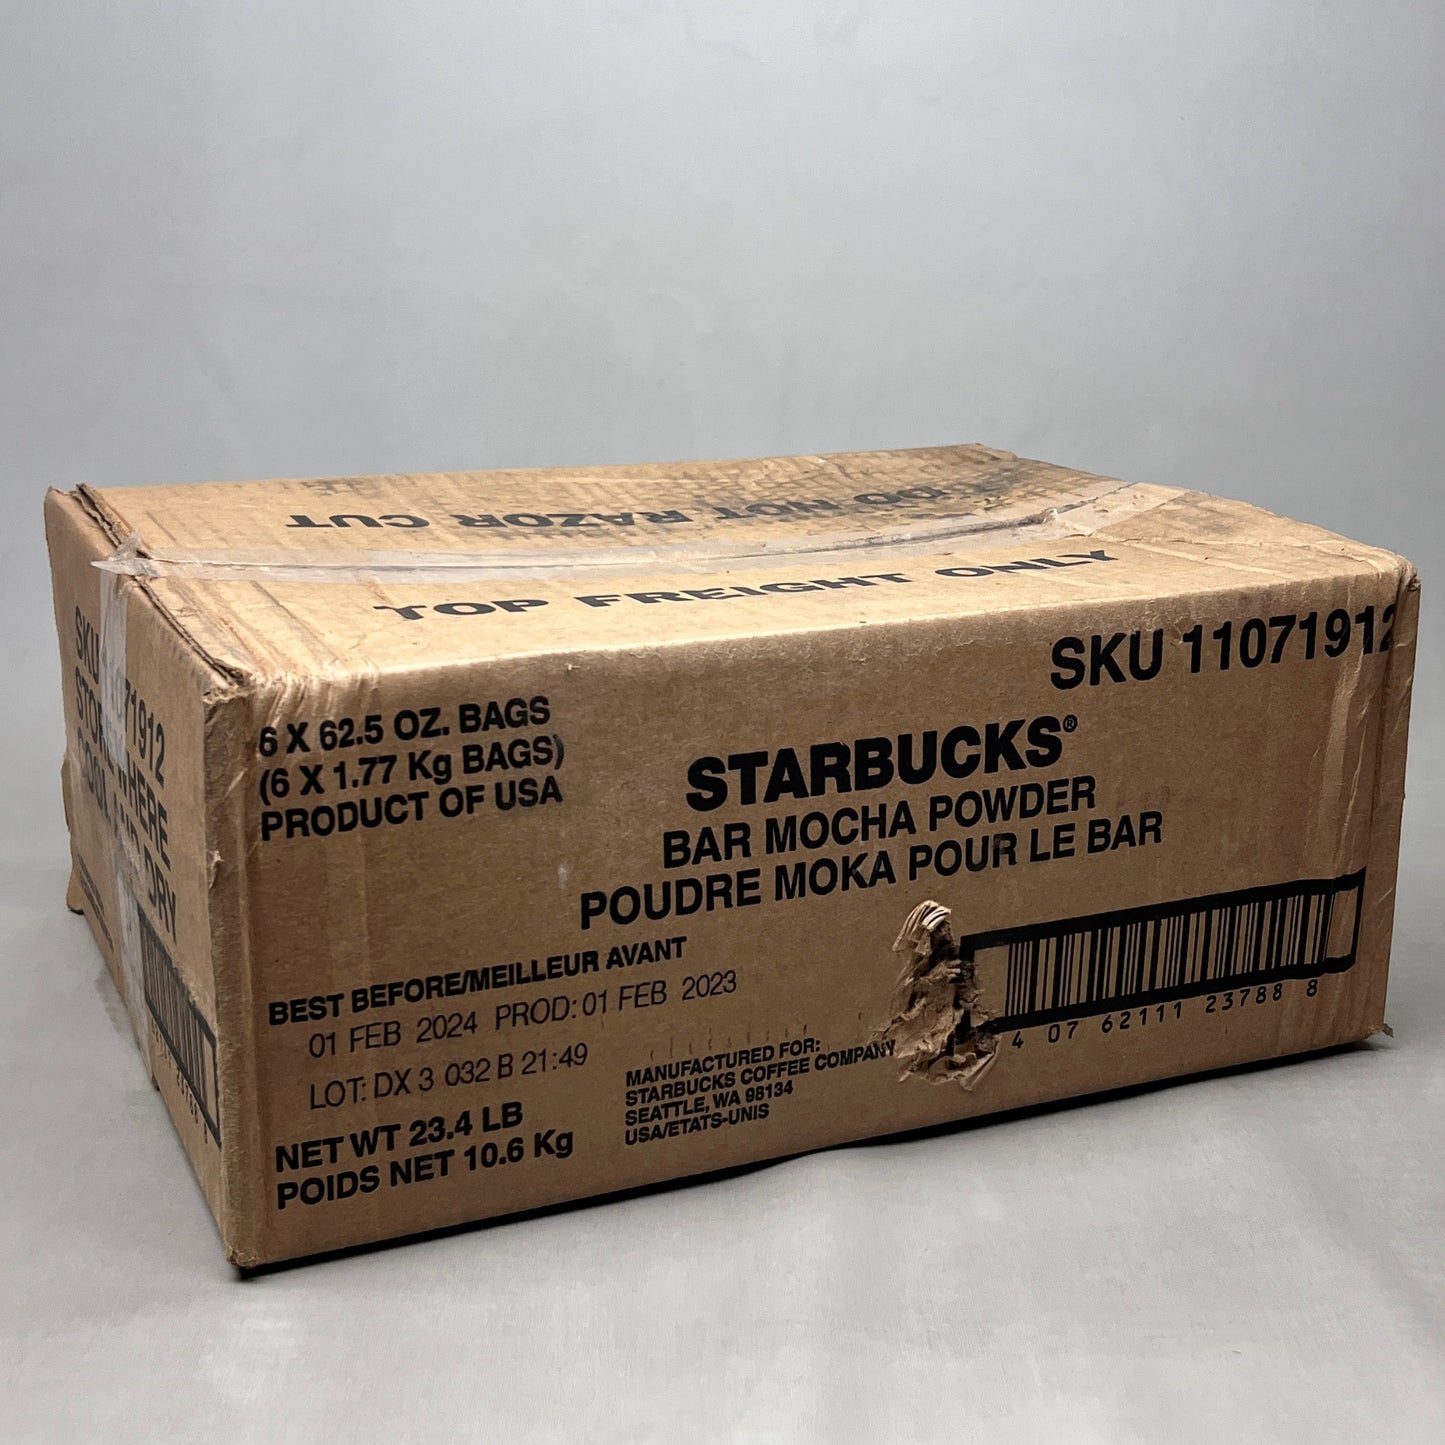 6-PK STARBUCKS Bar Mocha Powder Each 62.5 oz/bags BB 03/24 (New) A